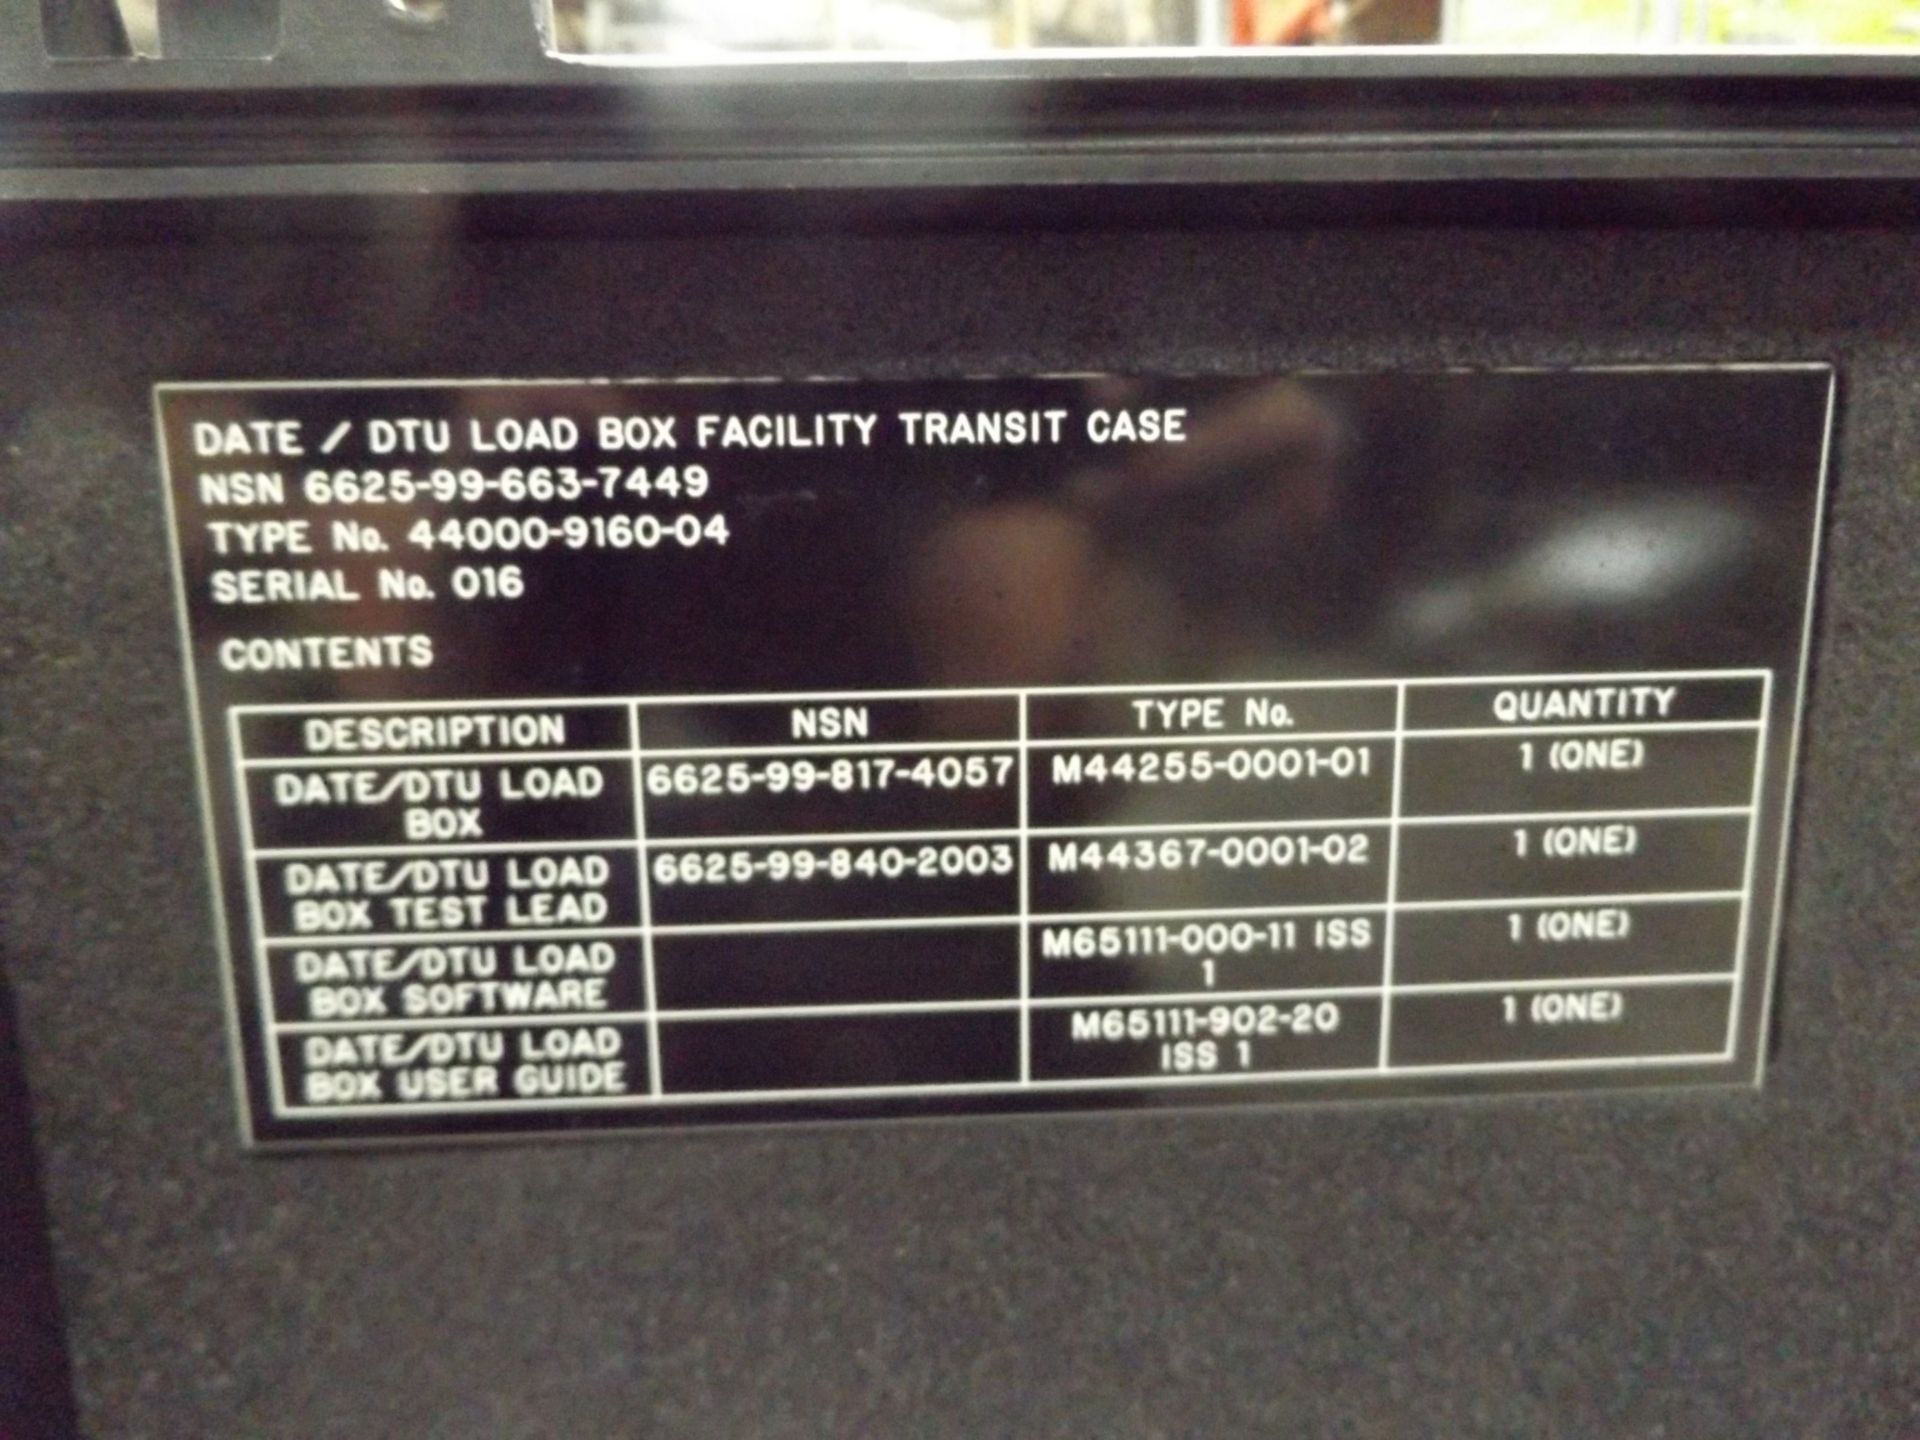 3 x Racal DTU Load Box Facilities in Peli Protector 1500 Cases - Image 5 of 7